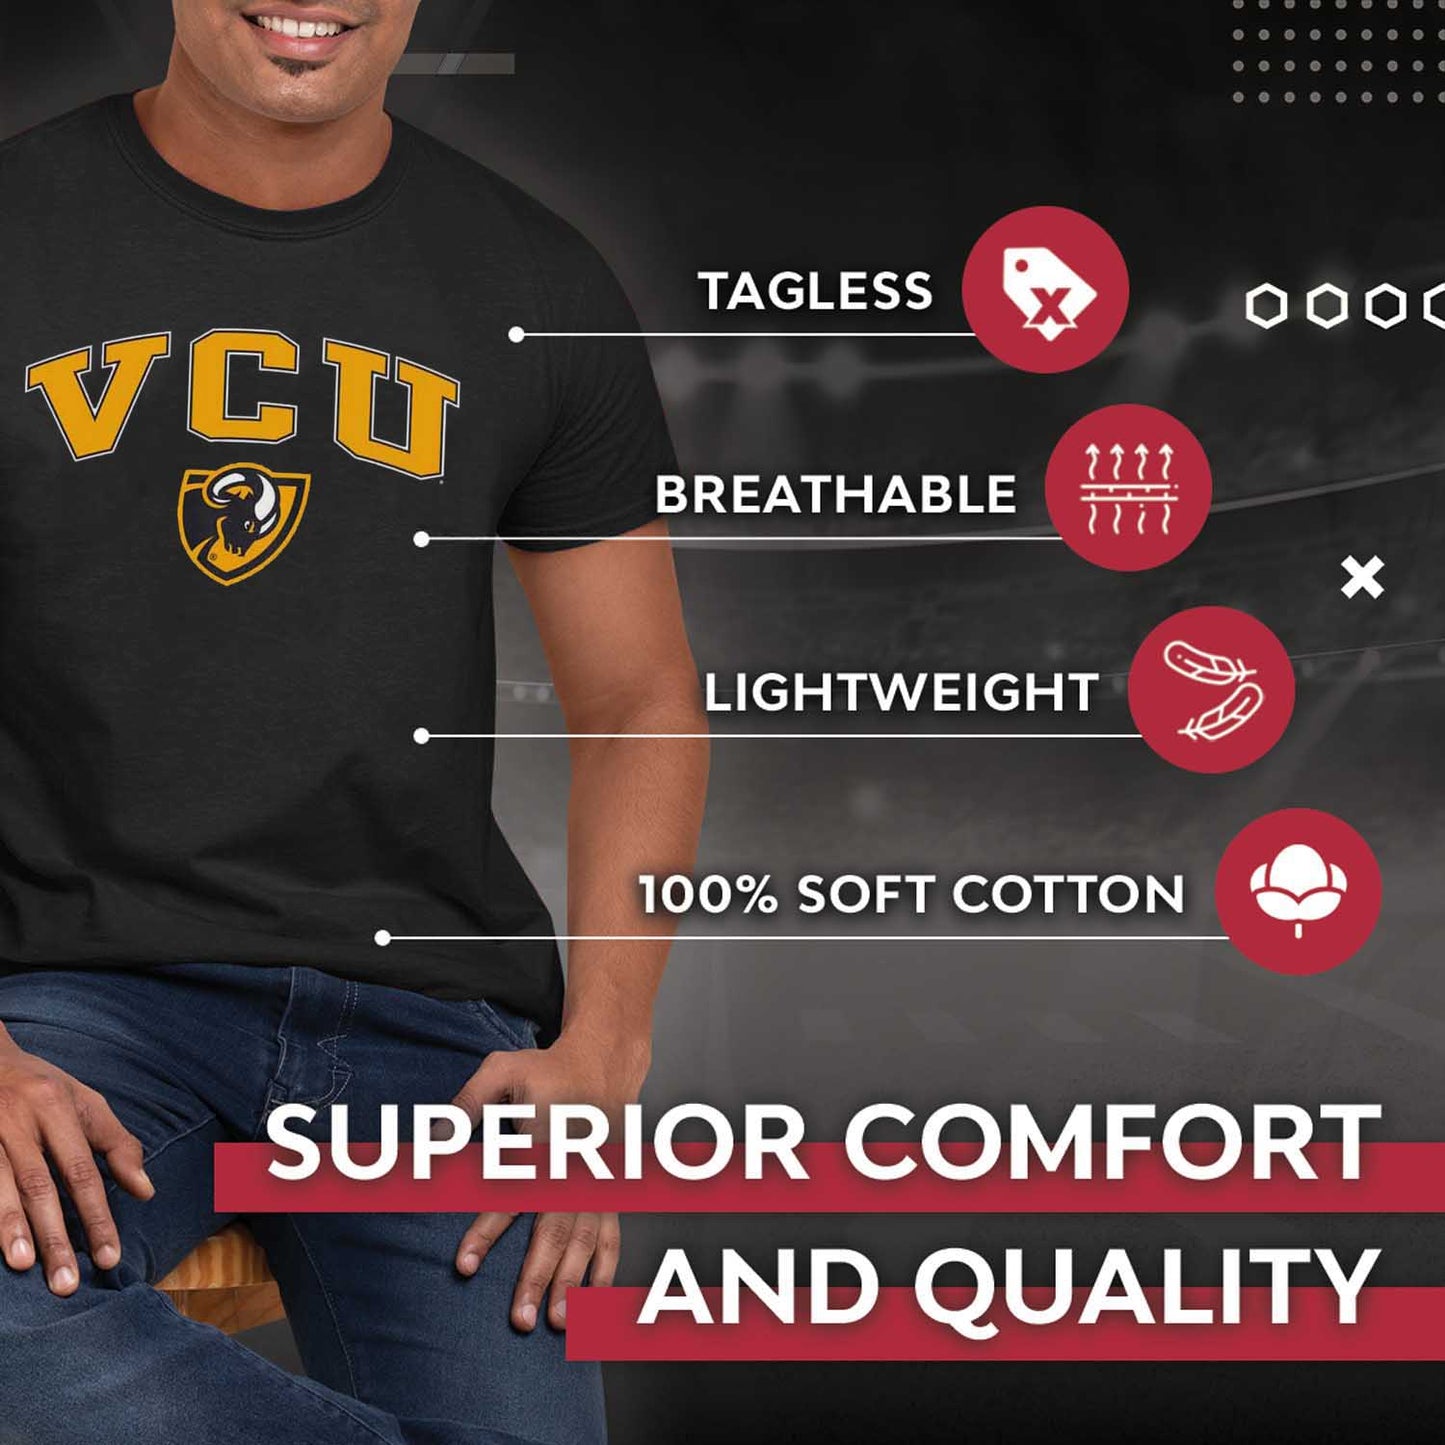 VCU Rams  Arch and Logo Short Sleeve T-shirt - Black